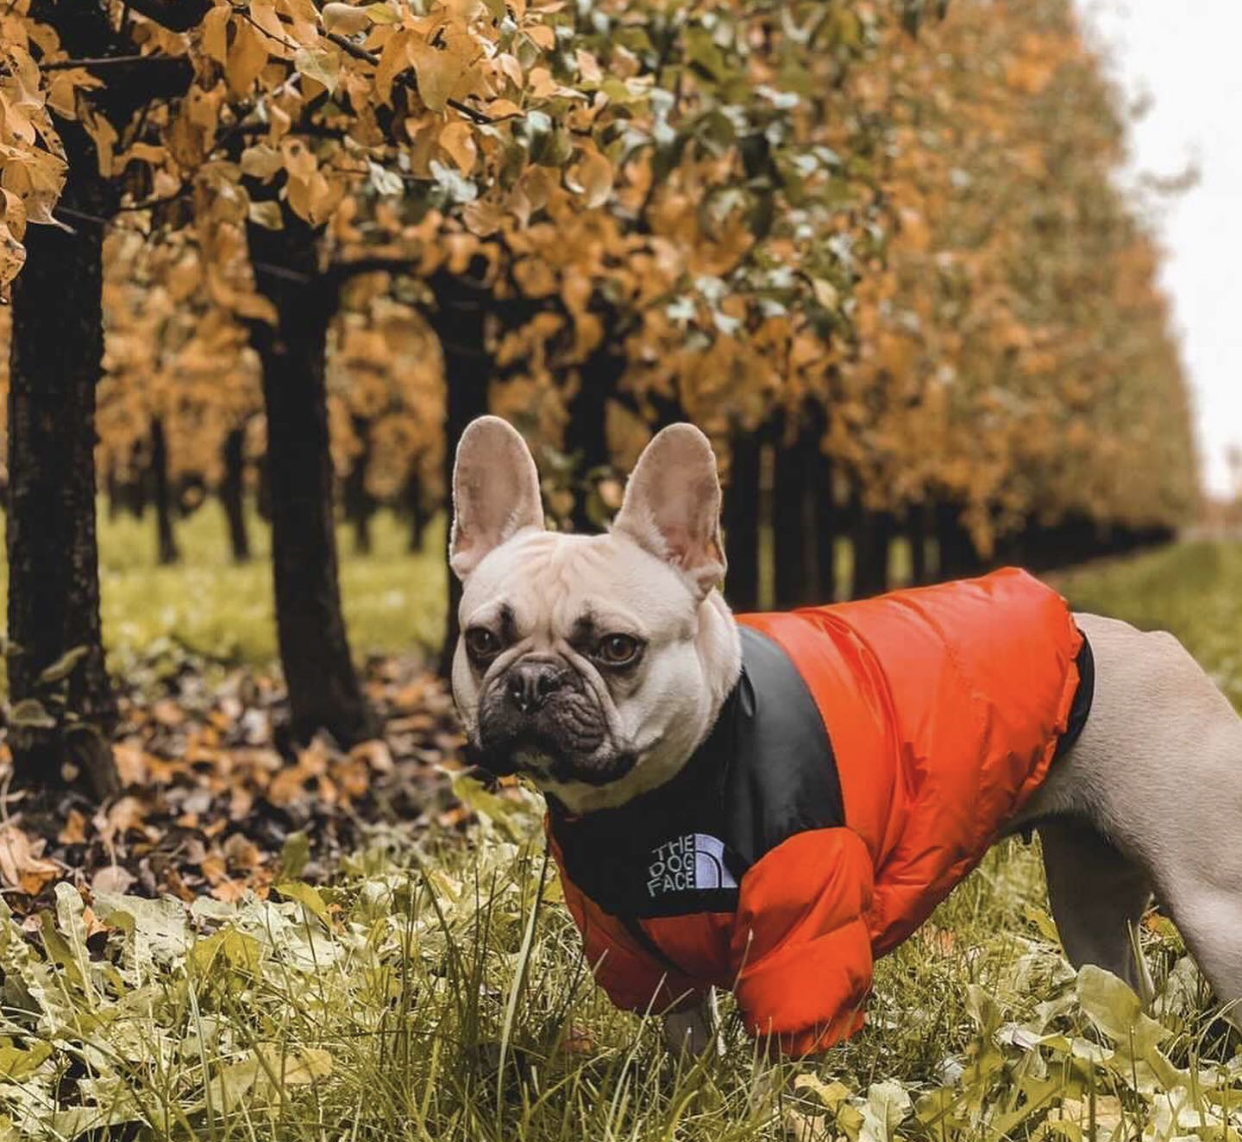 Pet Fashion Designer Clothes Harnesses Collars — Dogssuppliesrus